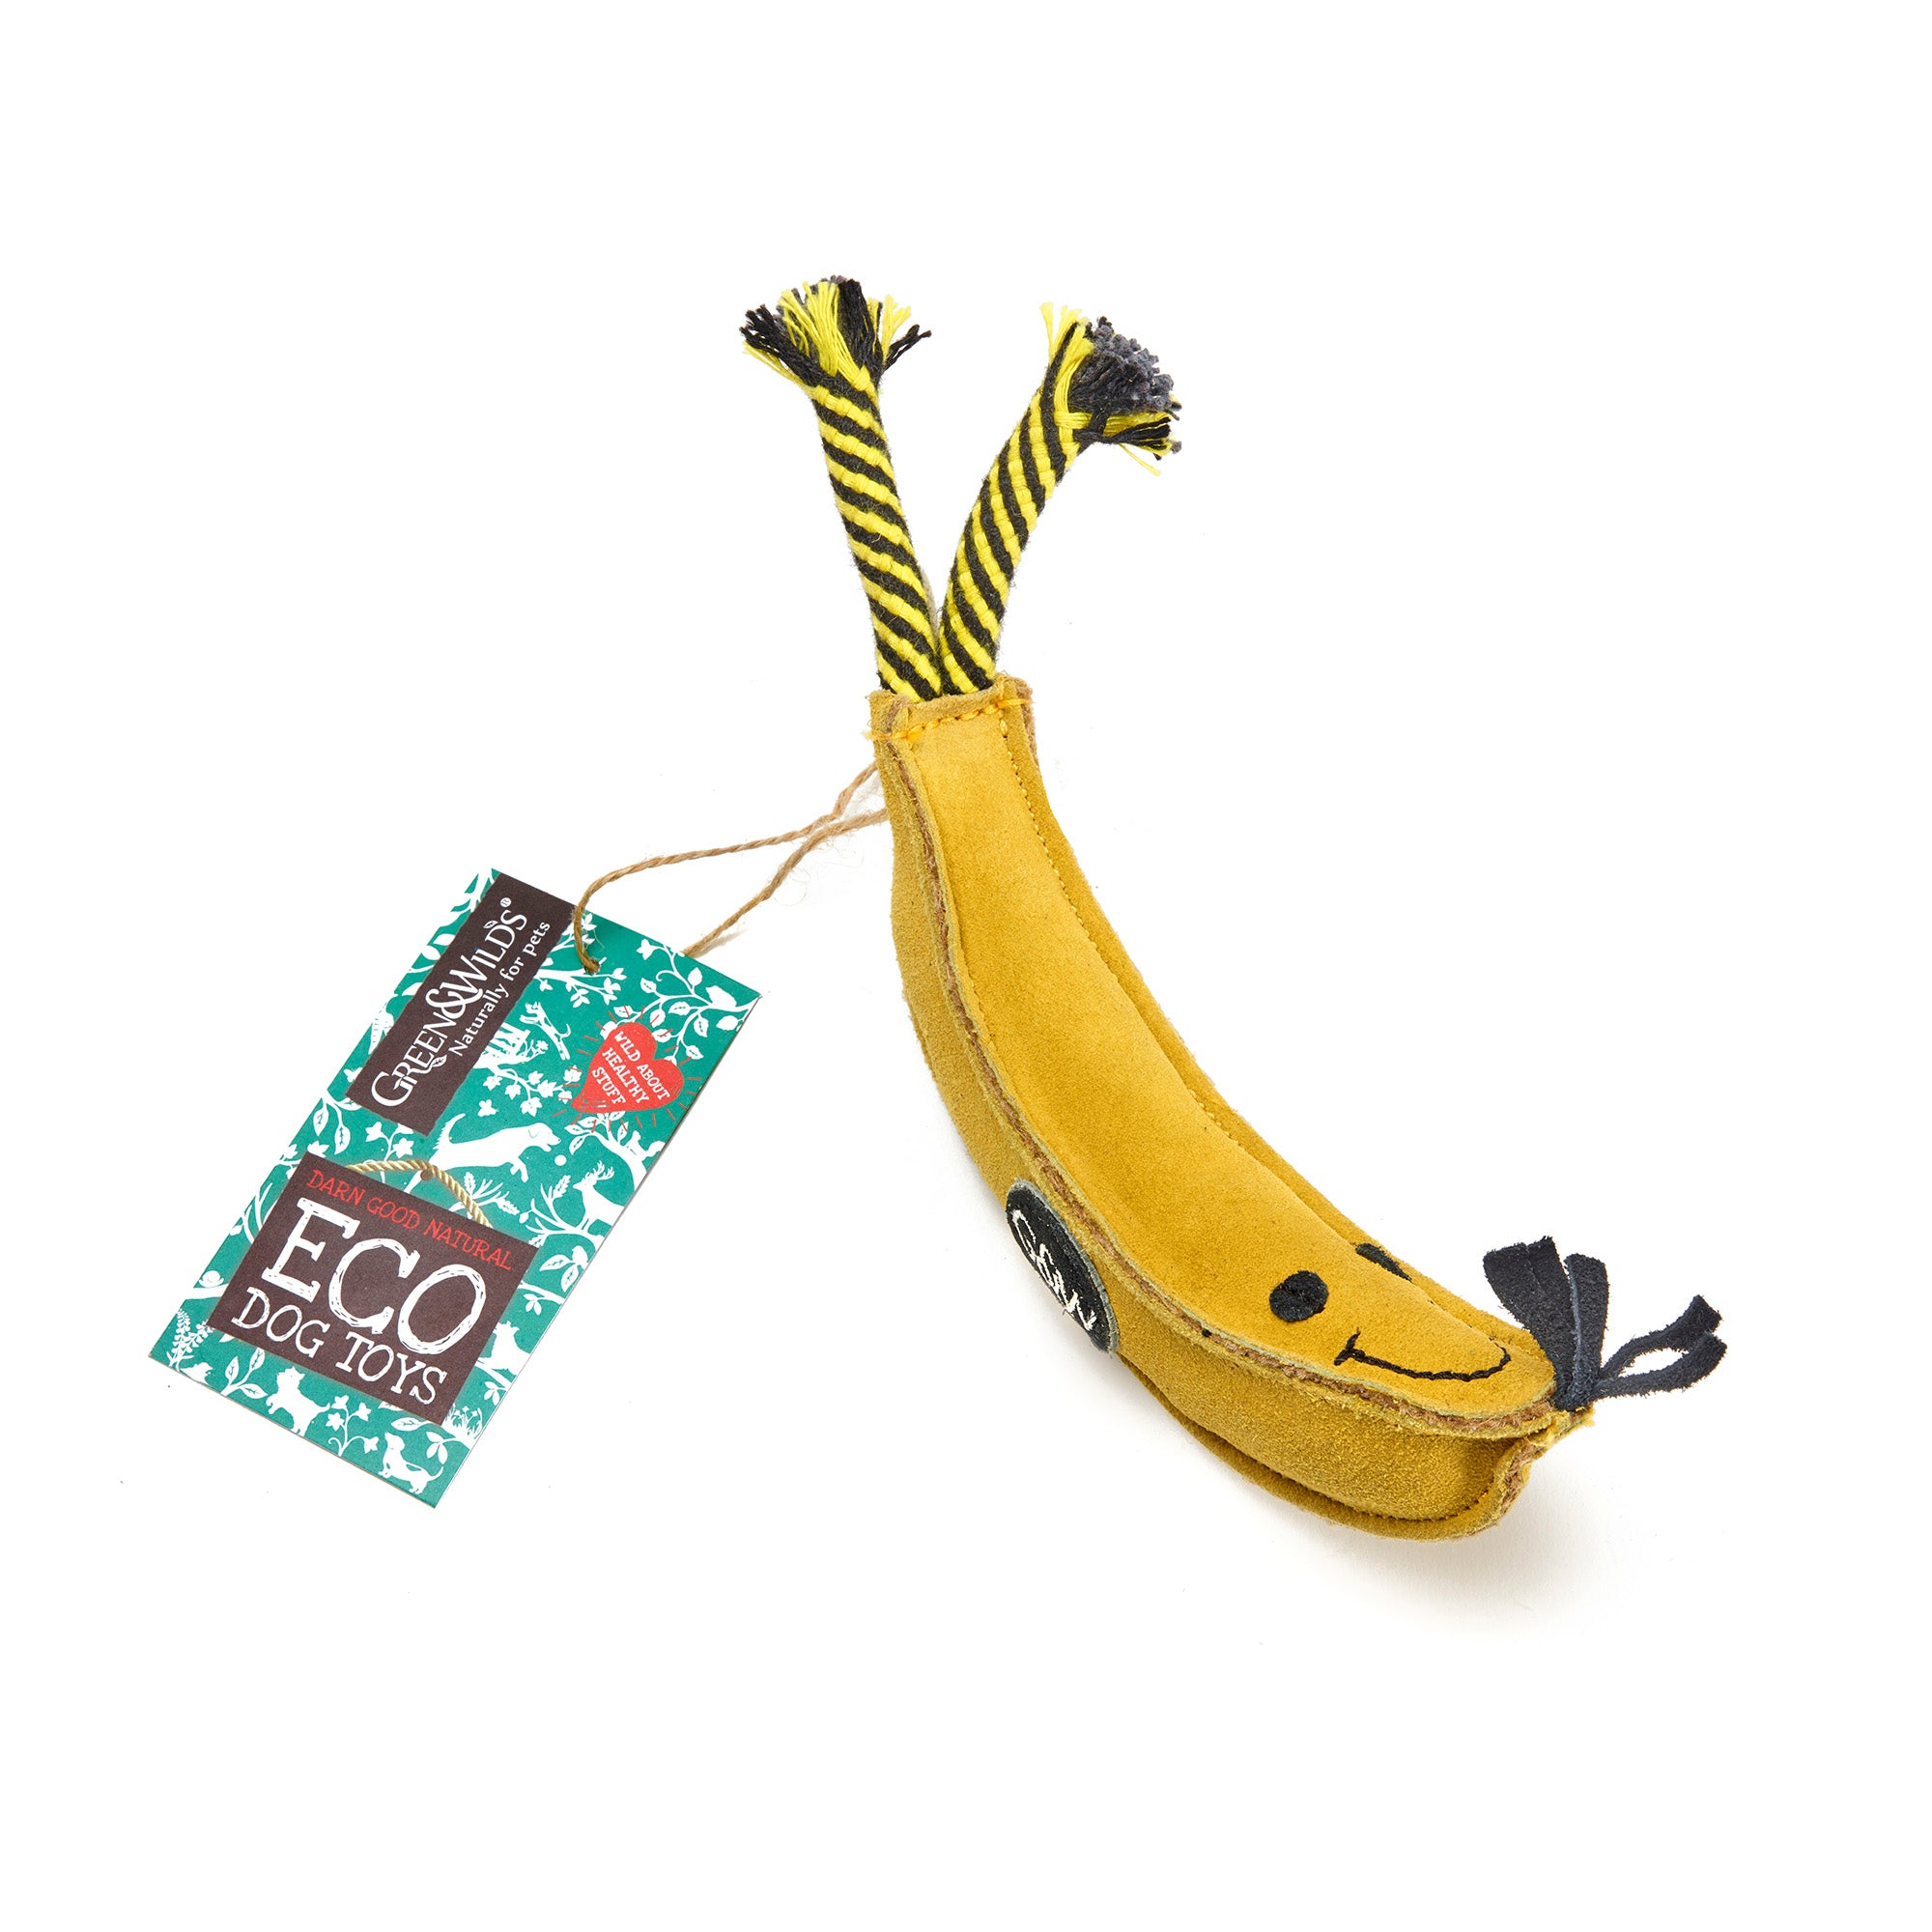 Barry Banana Eco Toy